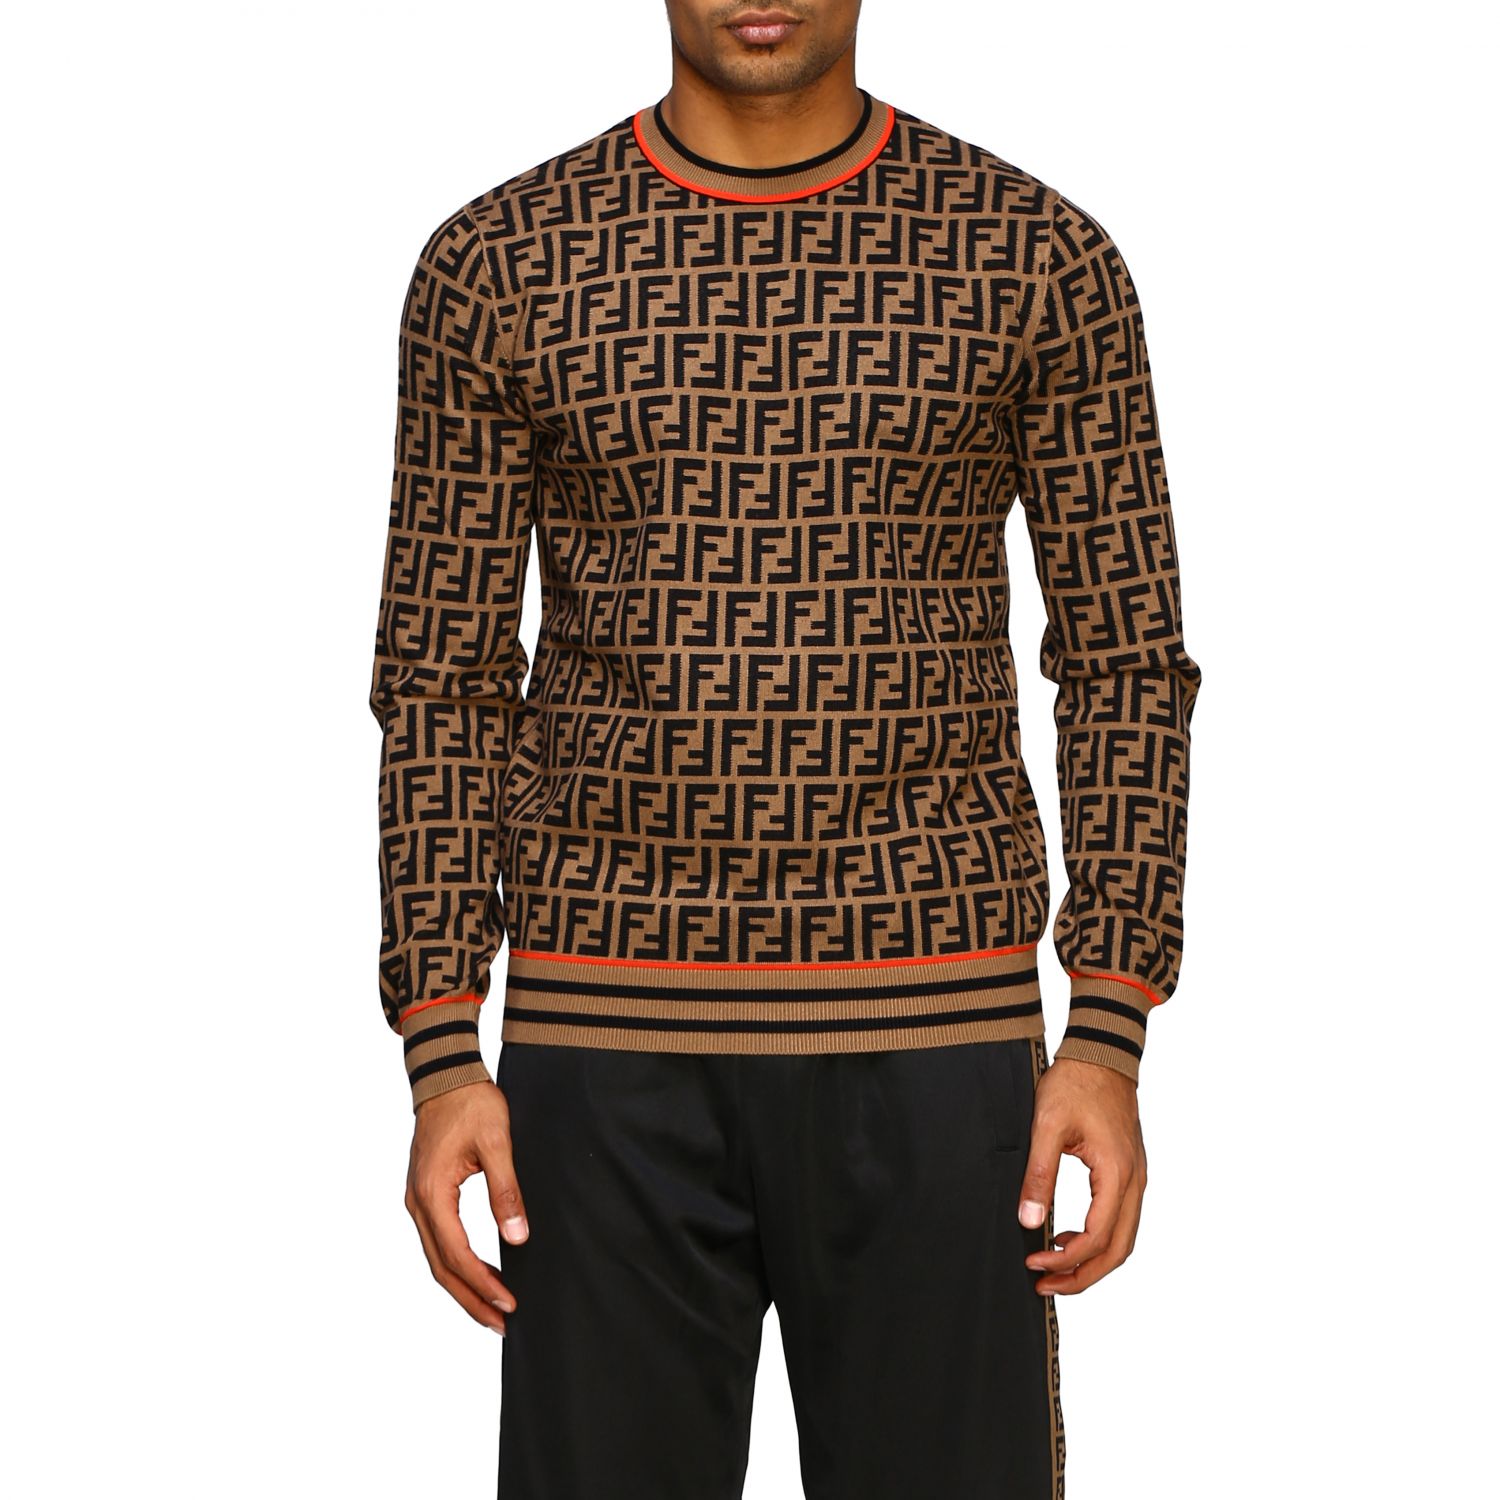 FENDI: crew neckline sweater with FF monogram - Tobacco | Fendi sweater ...